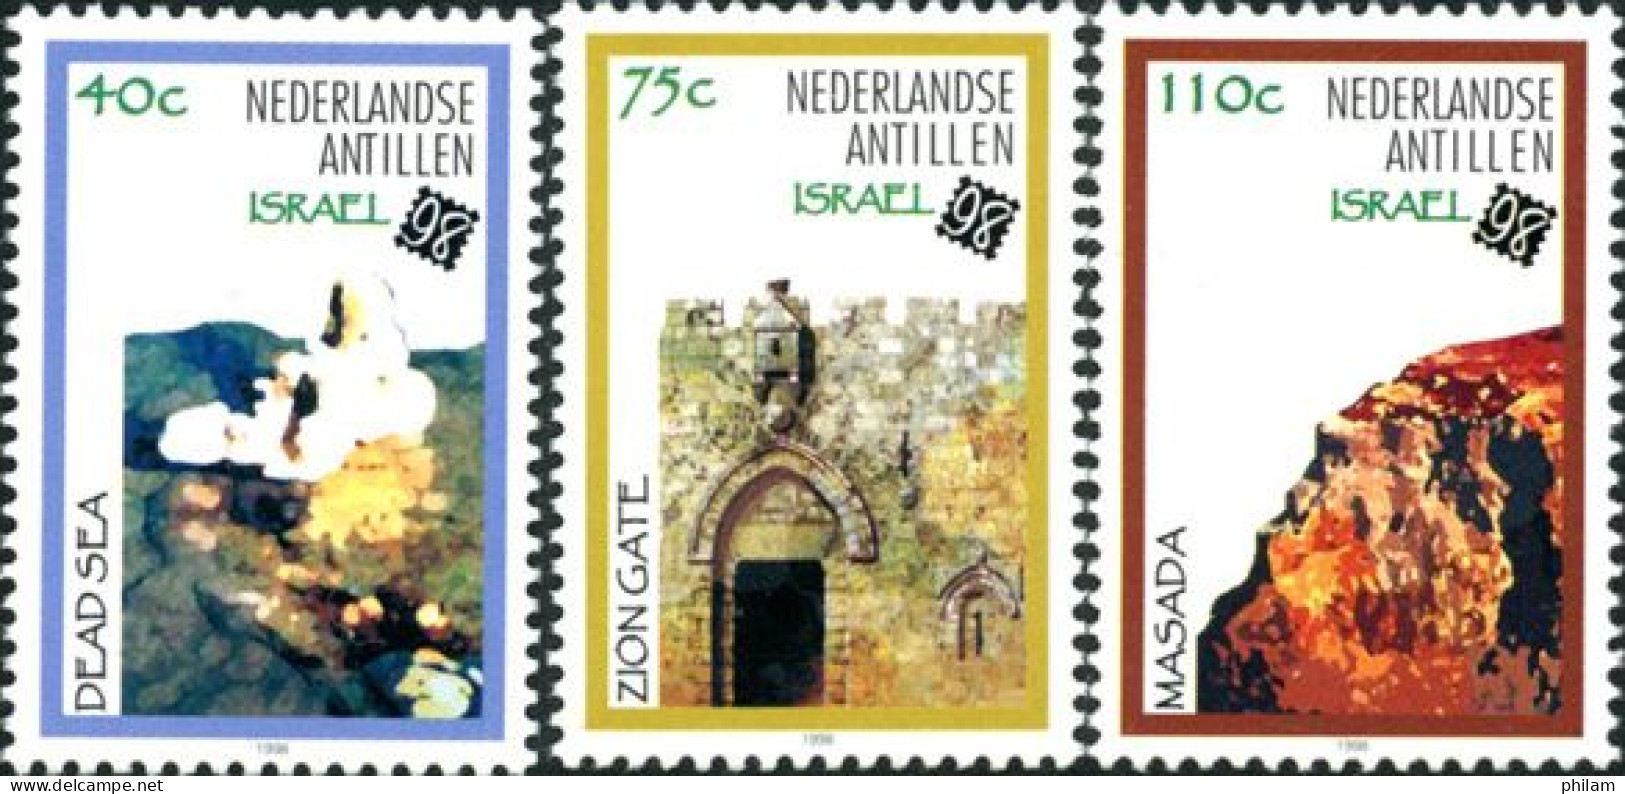 ANTILLES NEERLANDAISES 1998 - Israël 98 - Sites - 3 V. - Curacao, Netherlands Antilles, Aruba